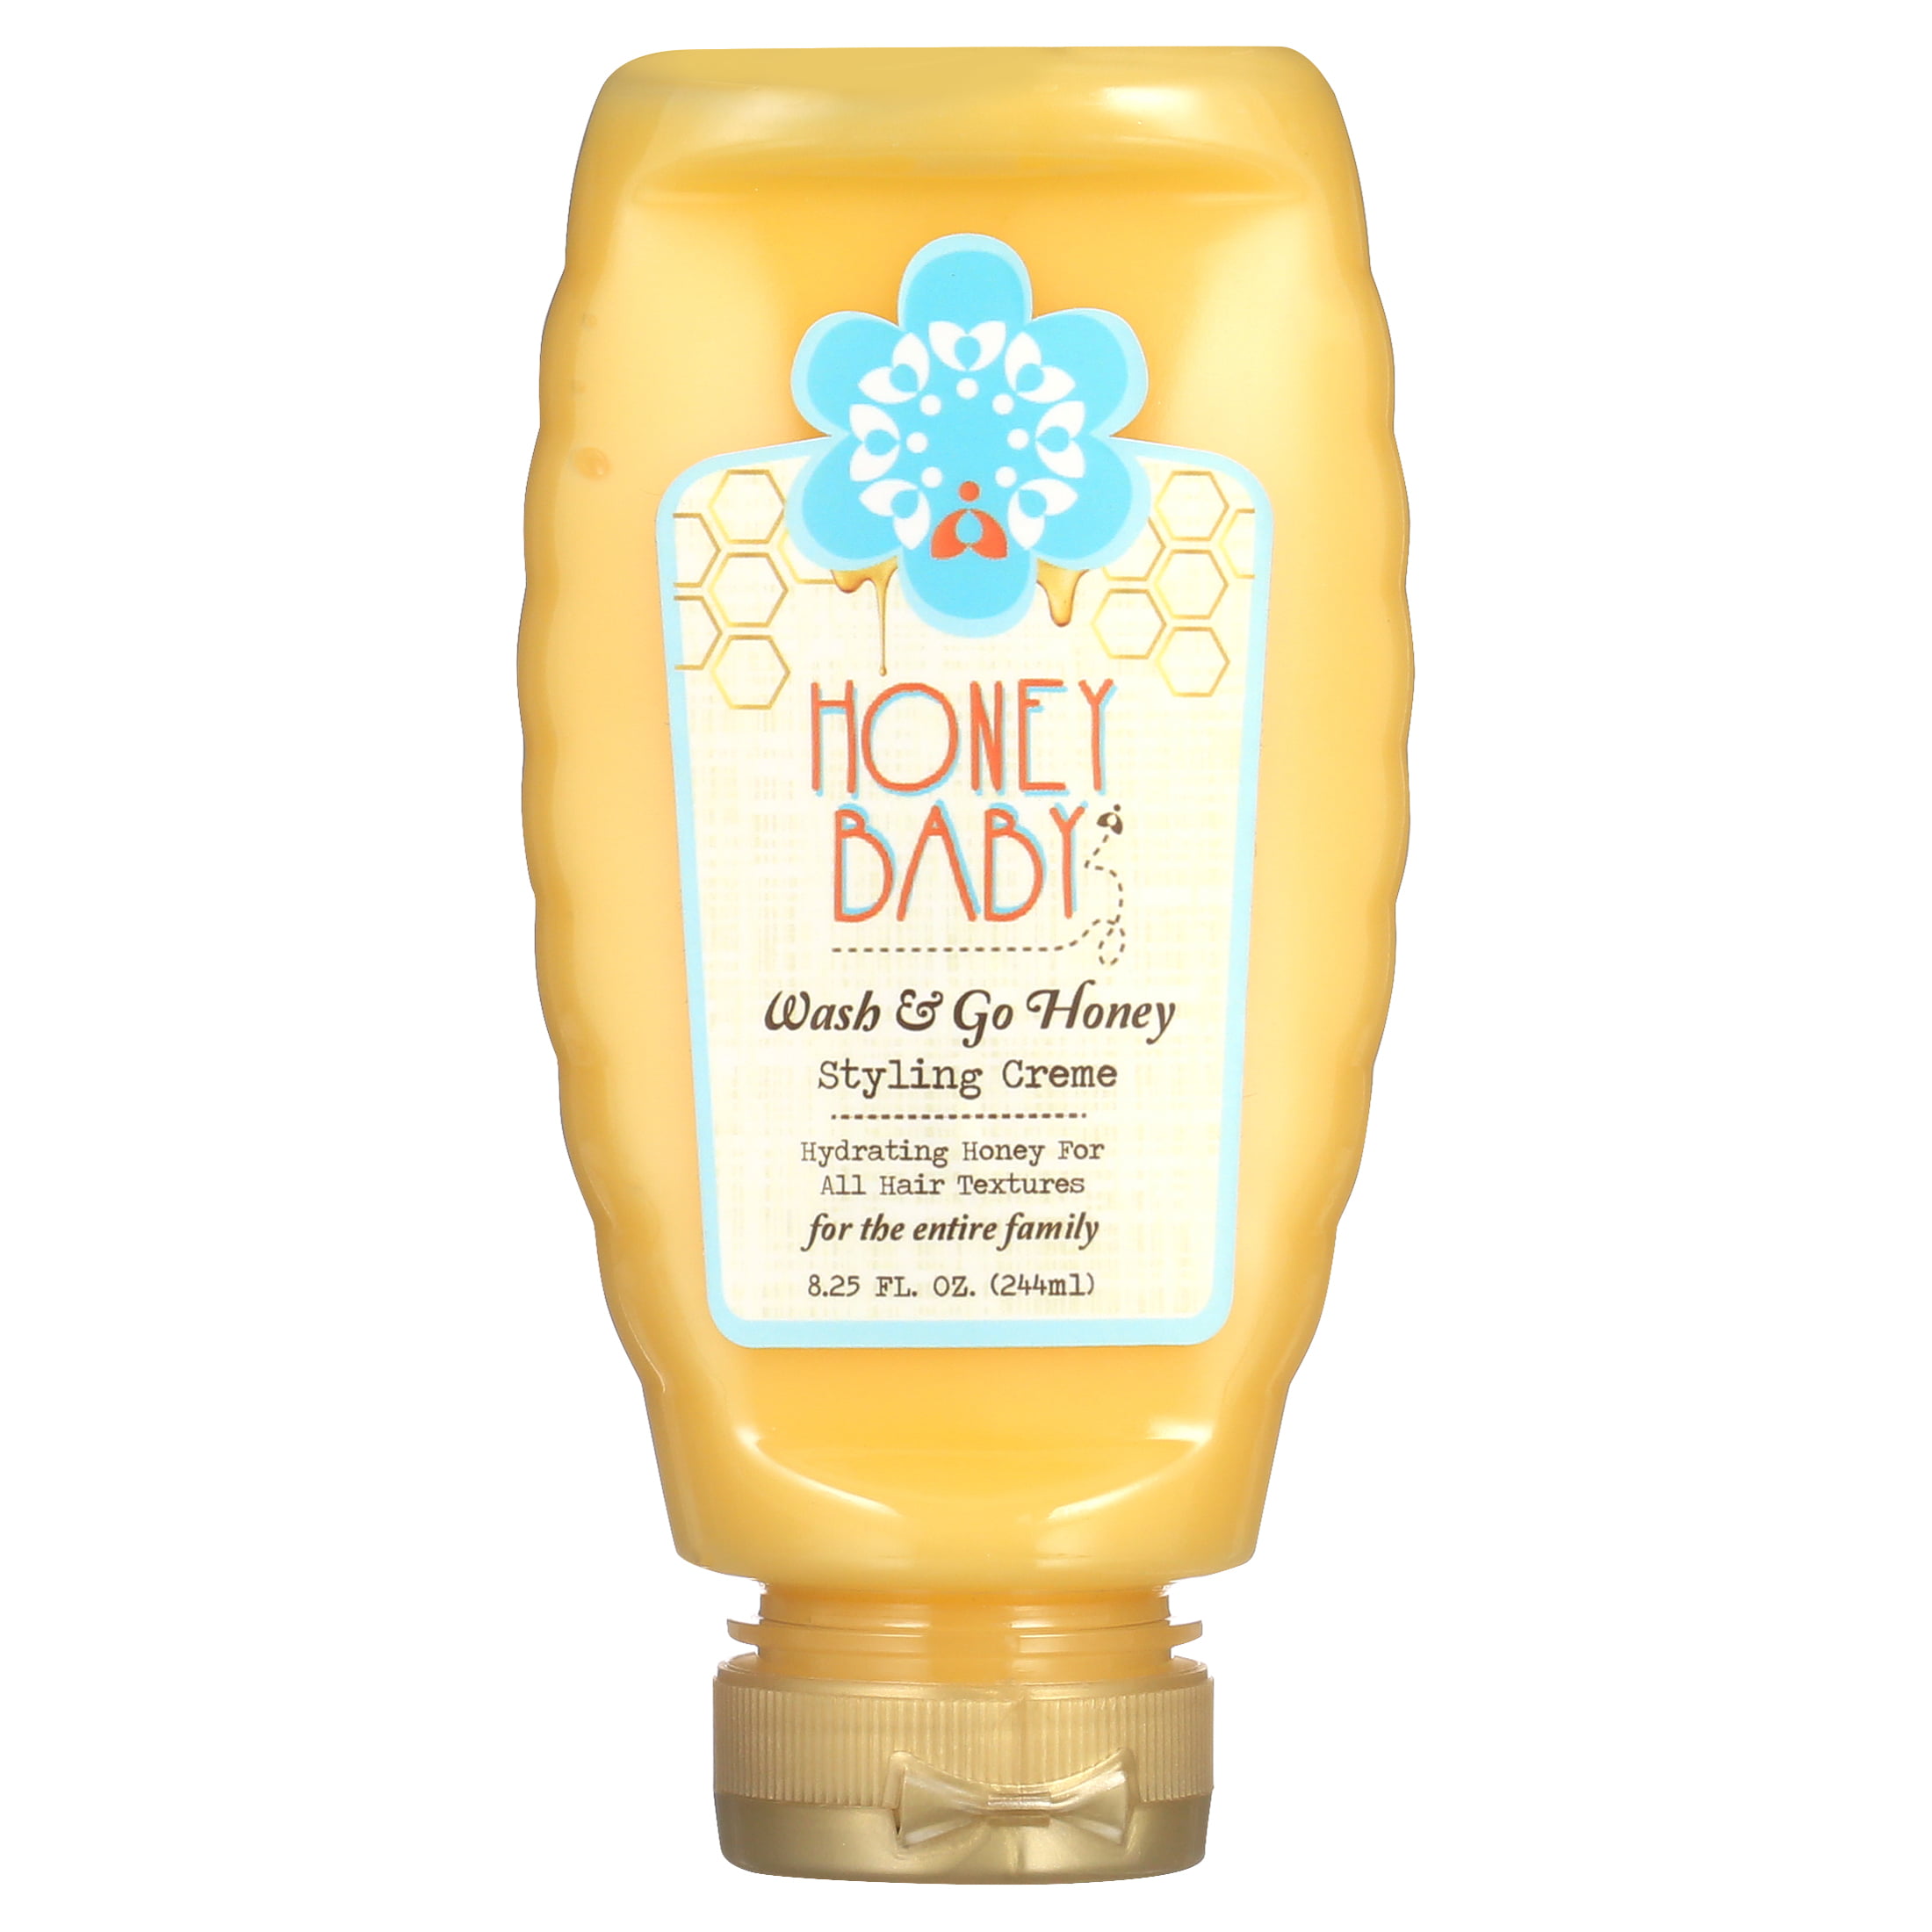 Go honey go. Honey Baby шампунь какие запахи есть. Attirance Colour Care Coconut & Sunflower Shampoo отзывы.